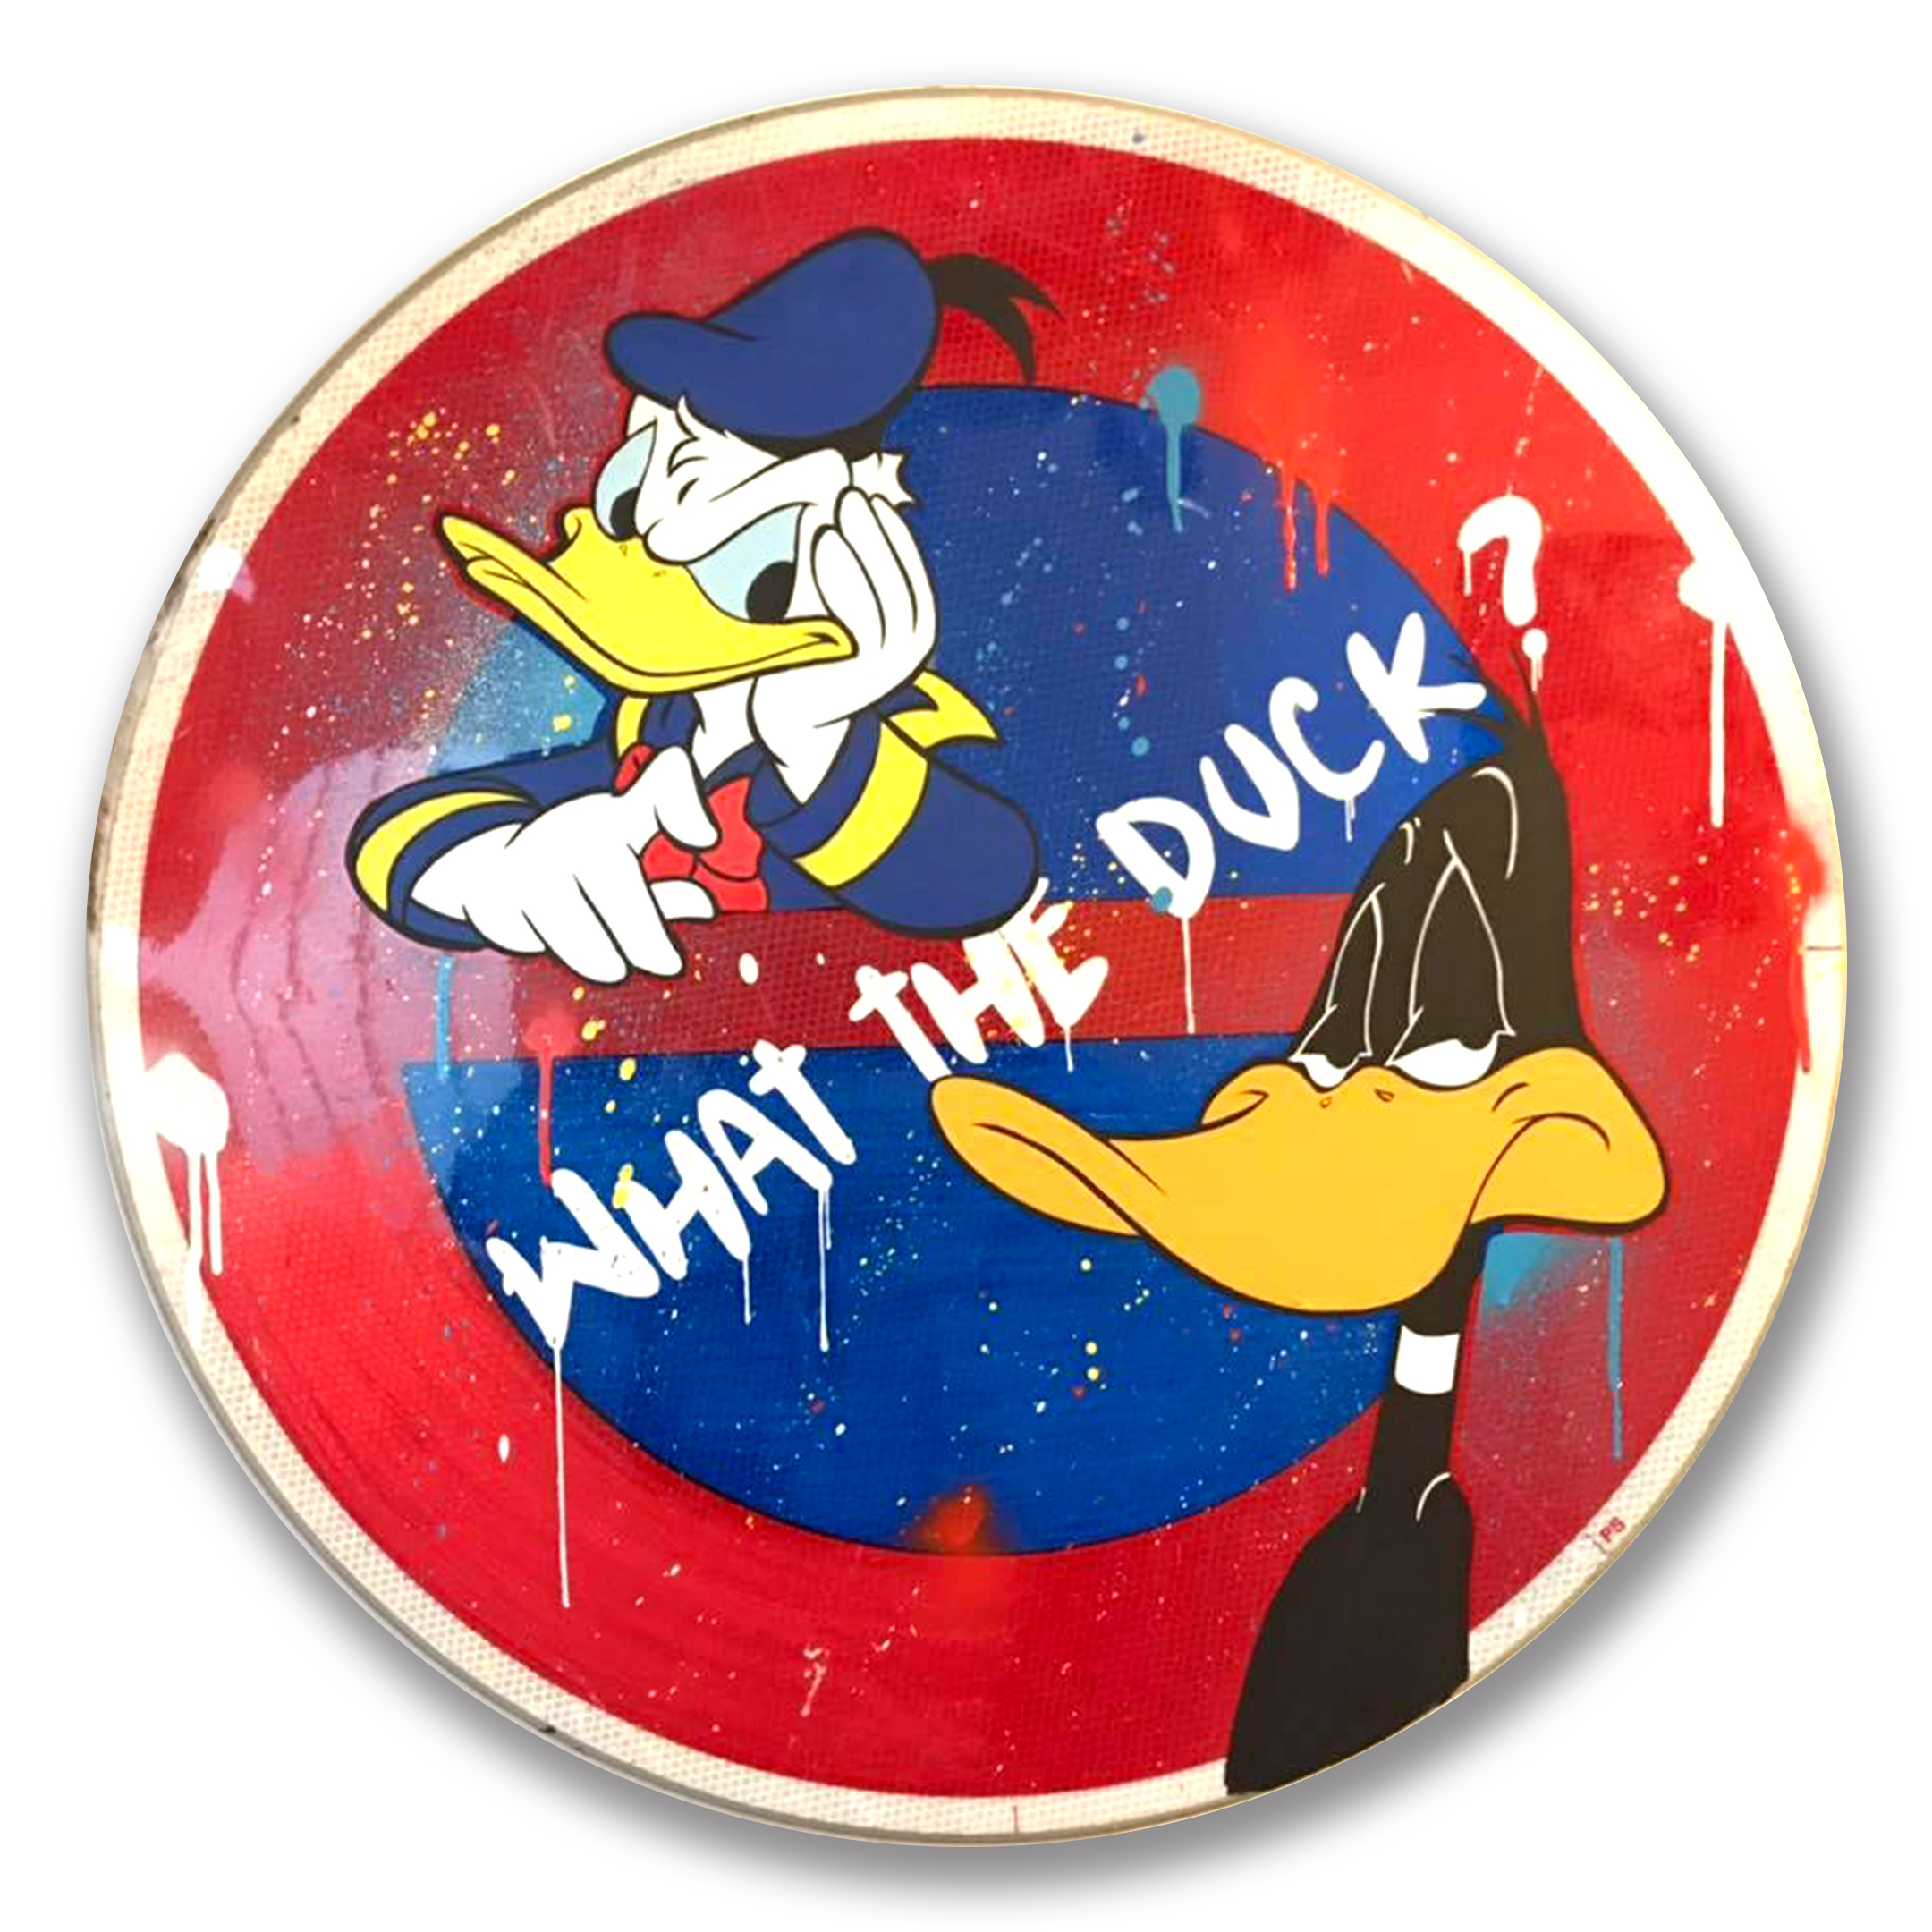 Arteido - Thierry Beaudenon - Peinture - Panneau Signalisation - Donald Duck 1 Daffy Duck 4 - Rond